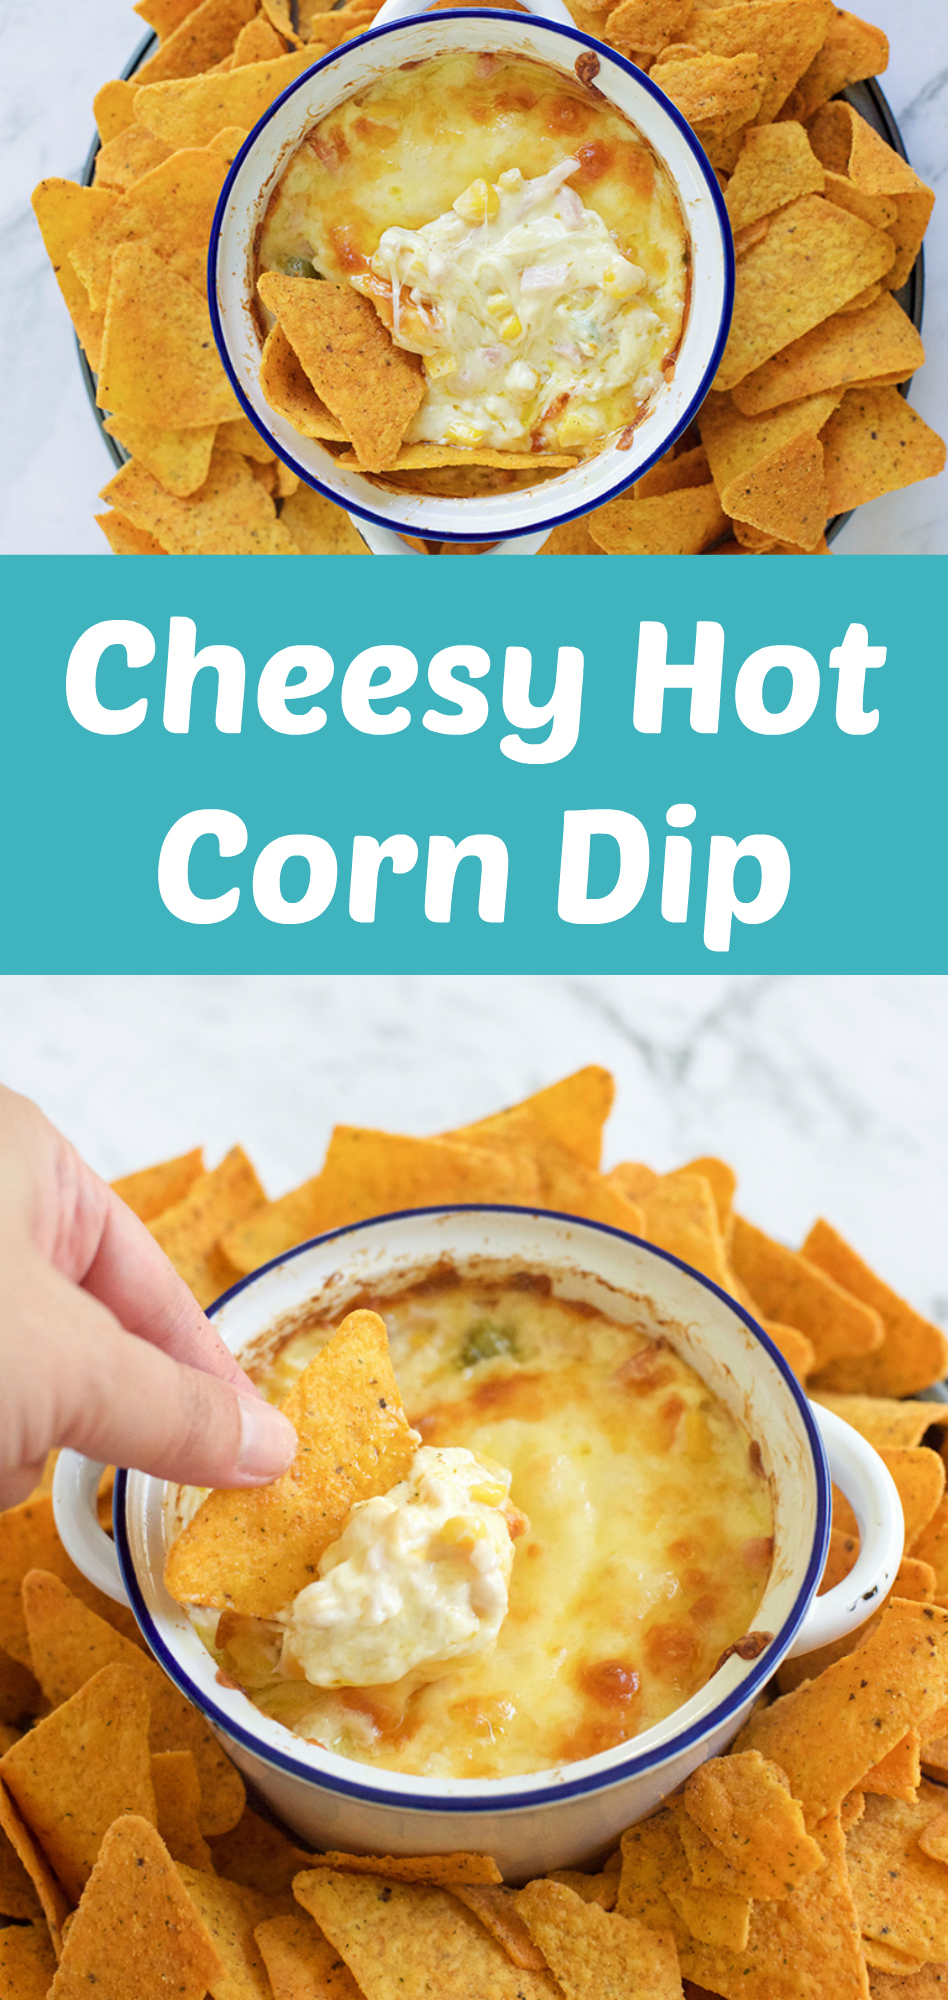 Delicious Cheesy Hot Corn Dip